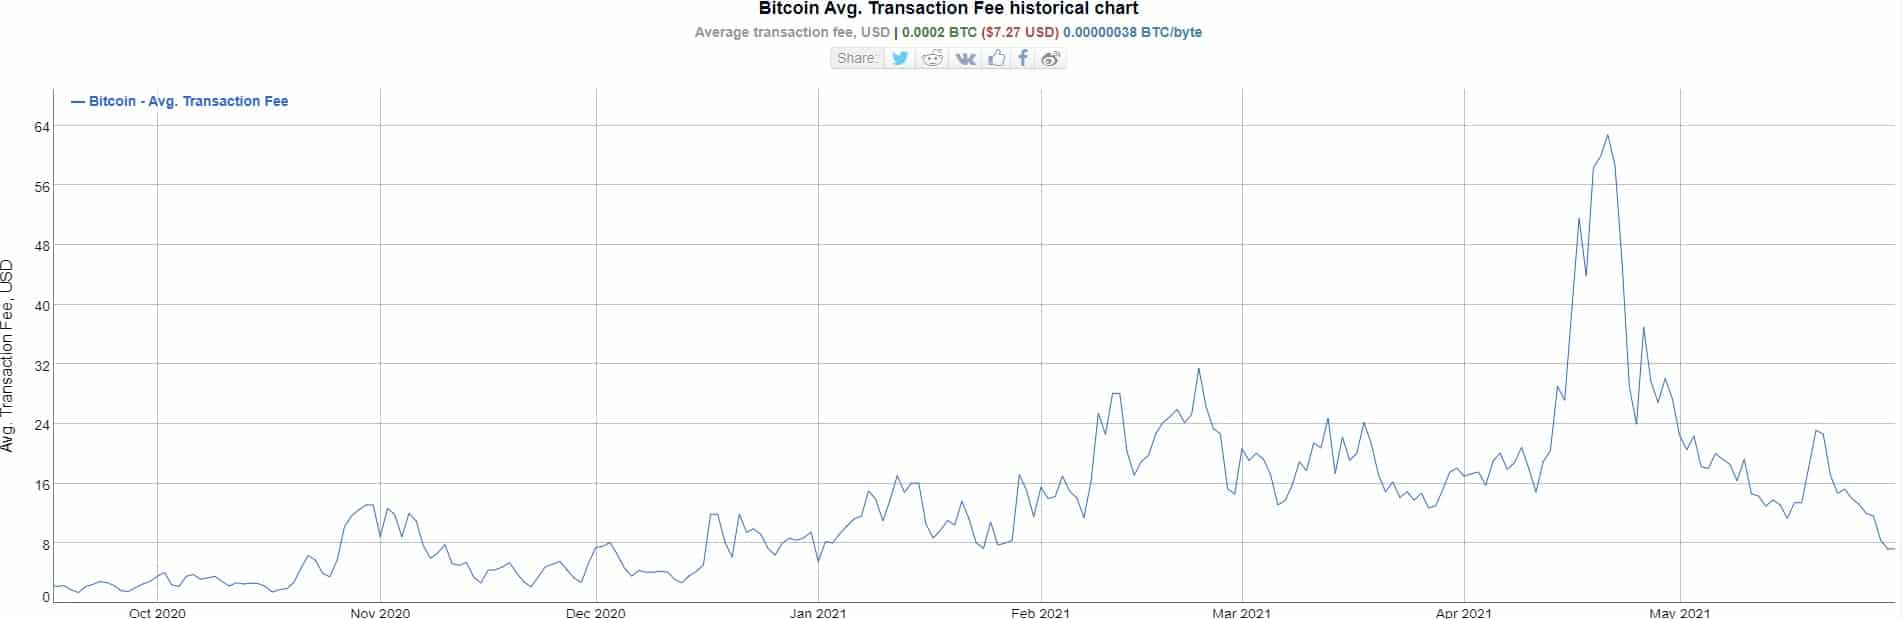 Average Transaction Fees on Bitcoin. Source: BitInfoCharts